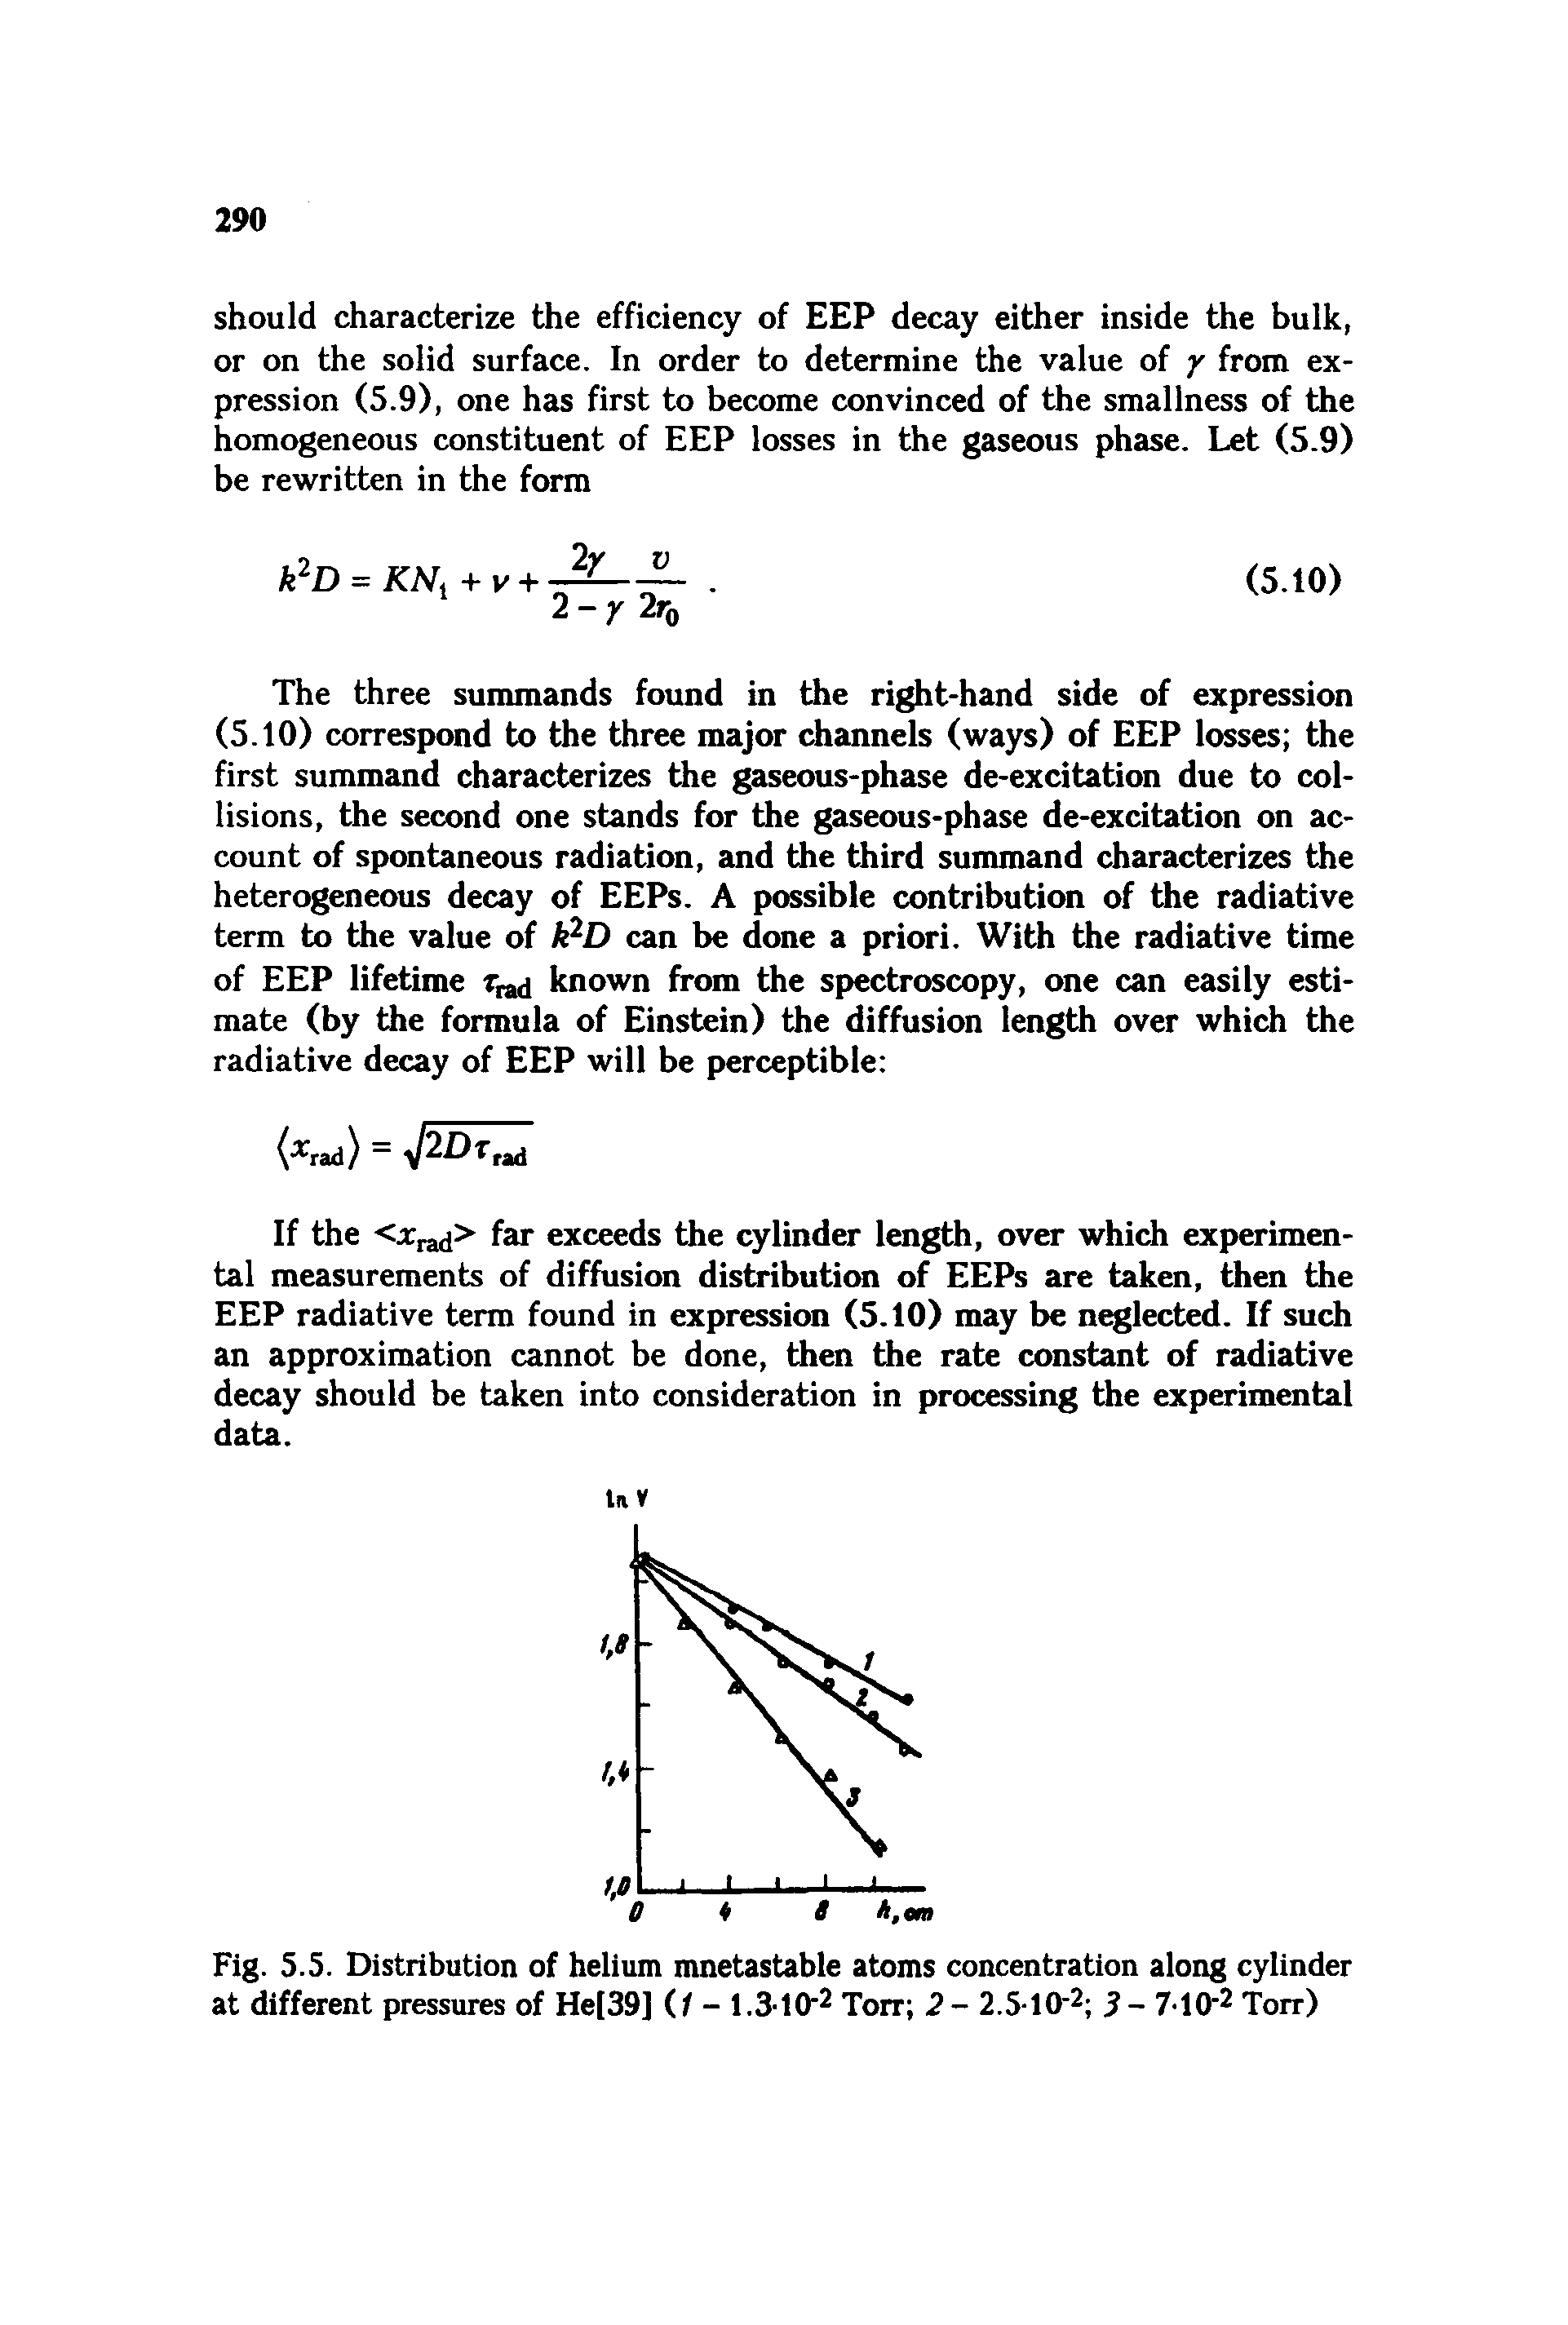 Fig. 5.3. Distribution of helium mnetastable atoms concentration along cylinder at different pressures of He[39] ( / - 1.310 2 Torr 2- 2.510-2 3- 710-2 Torr)...